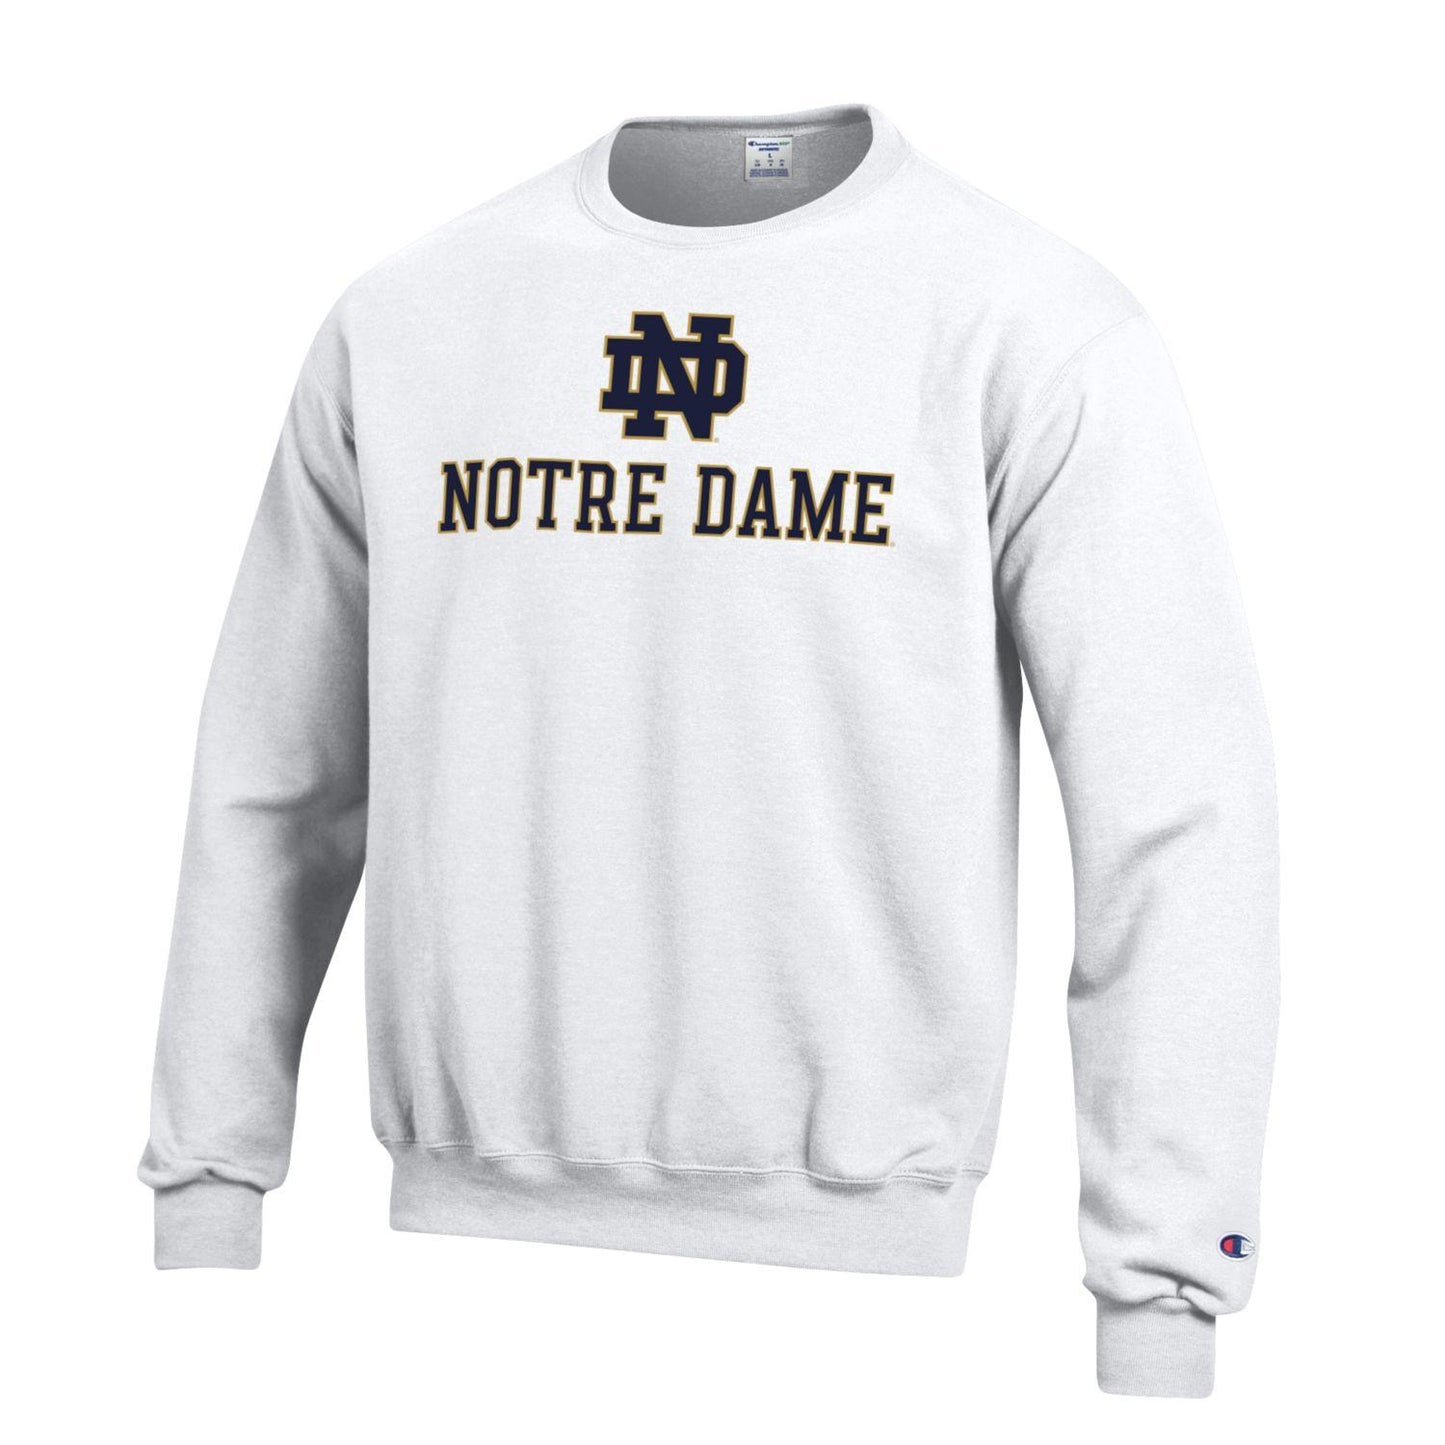 University of Notre Dame Ladies Sweatshirts, Notre Dame Fighting